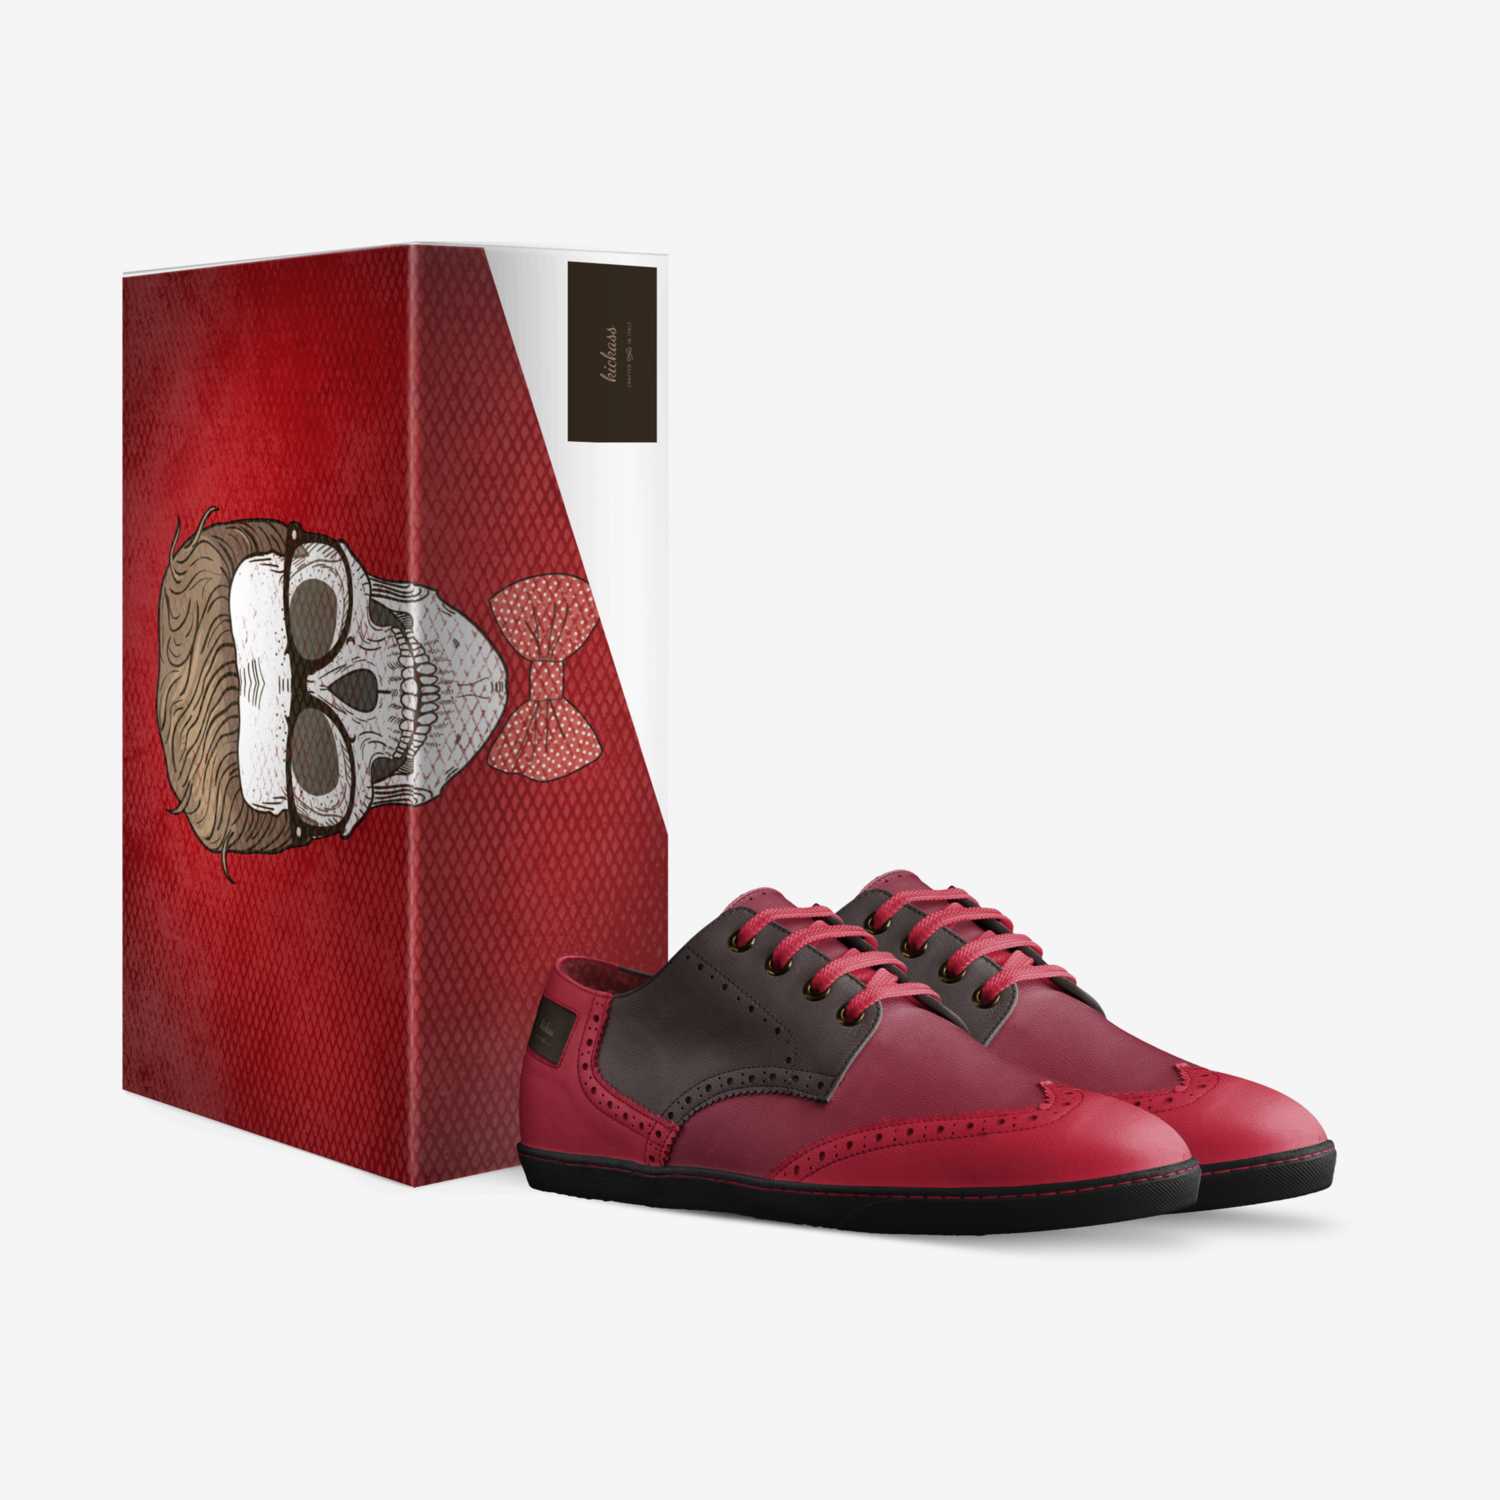 kickass custom made in Italy shoes by Jayden Ljh | Box view